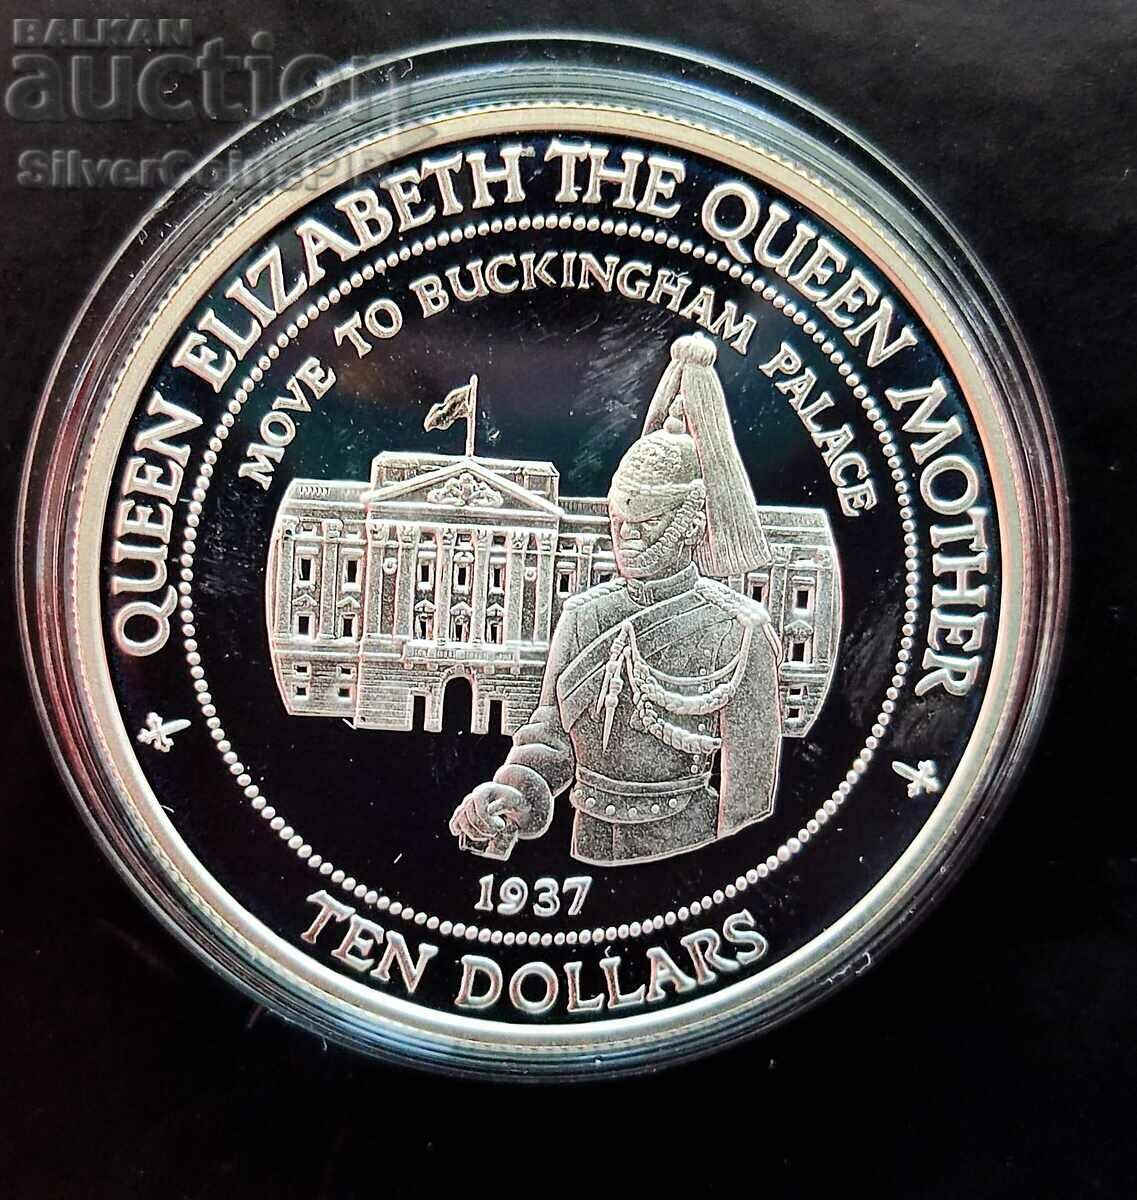 Silver $10 Move to Buckingham 1995 Fiji